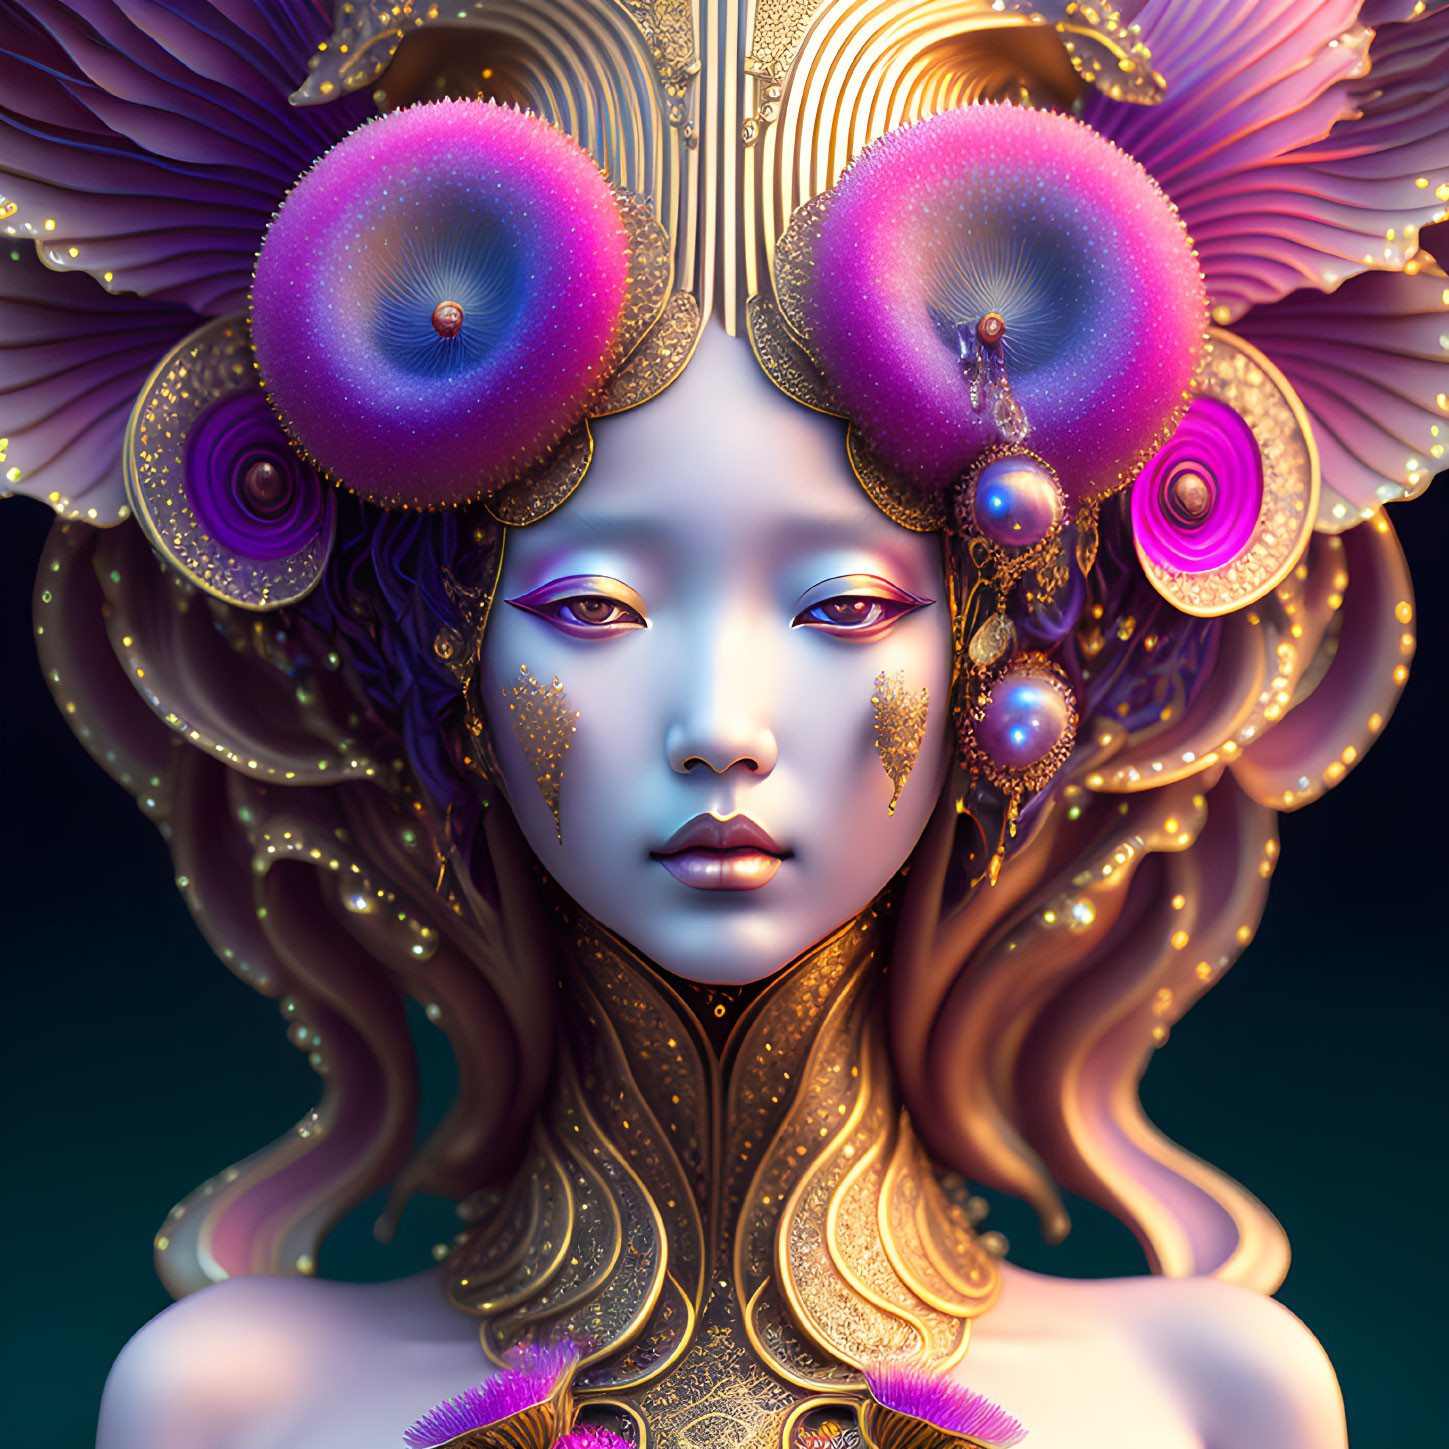 Digital art portrait: Woman with purple skin, gold headdress, violet seashells.